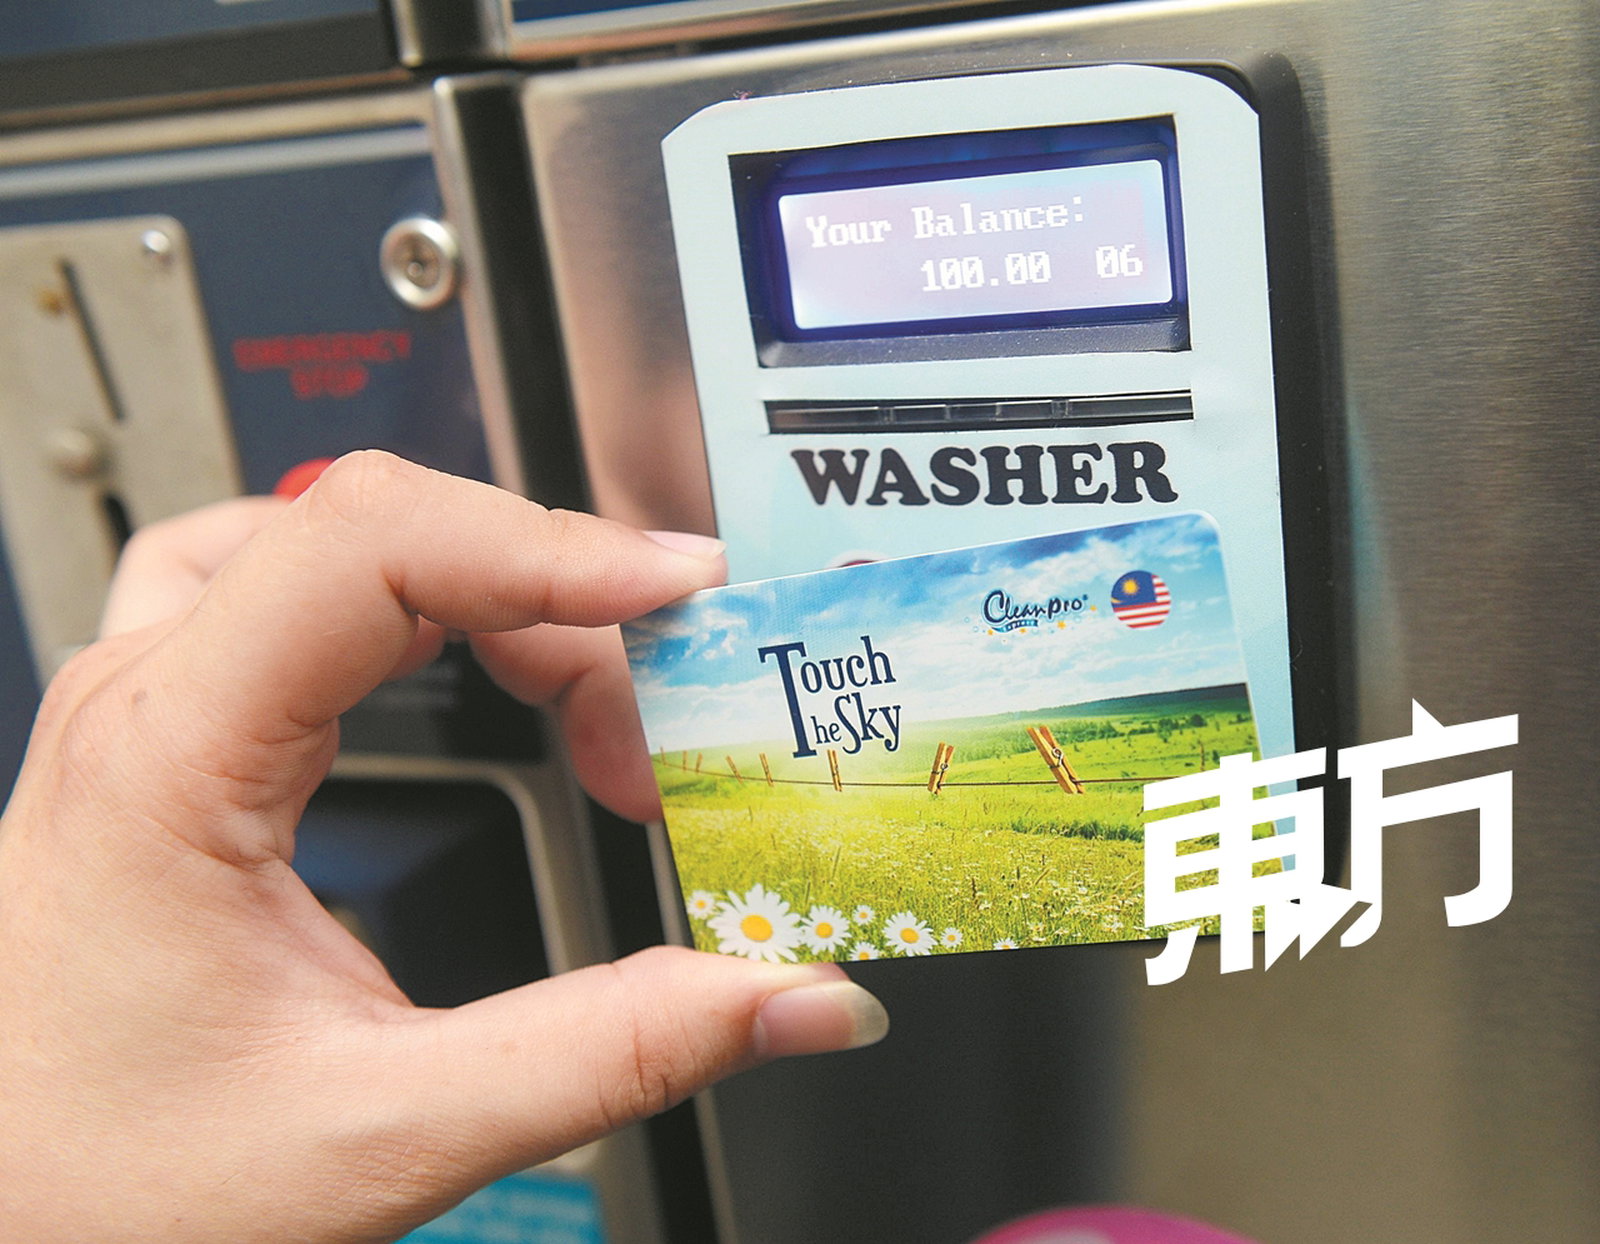 Cleanpro Express在2015年推出“Touch The Sky”一触式卡系统，透过使用此卡，顾客可以获得各种优惠，如充值回扣、以优惠价洗衣等，同时也免去使用硬币付款的麻烦。为符合电子时代的来临，Cleanpro也推出更方便的手机应用程式，进行付款、加额及预订洗涤服务等。